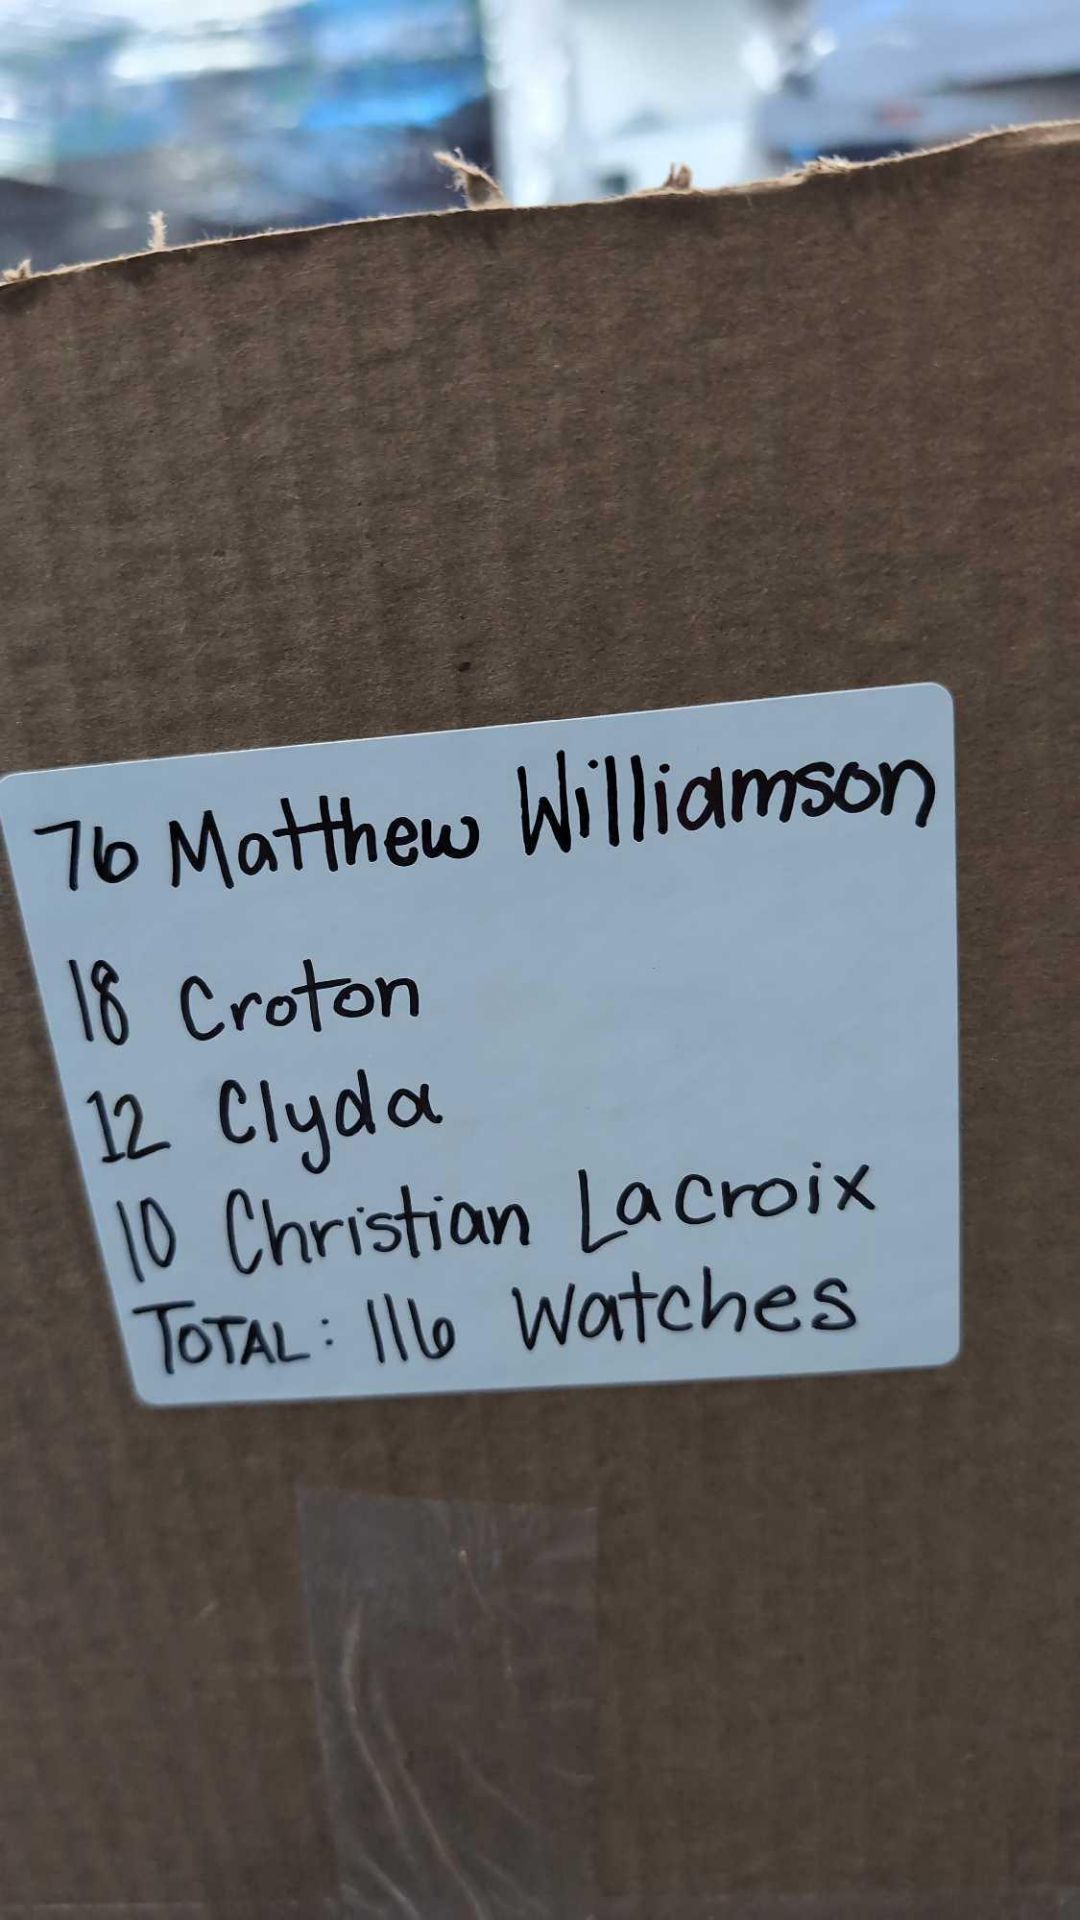 Watches: 76 Matthew Williamson, 18 Croton, 12 Clyolo, 10 Christian Lacroix, 166 Total - Image 2 of 11